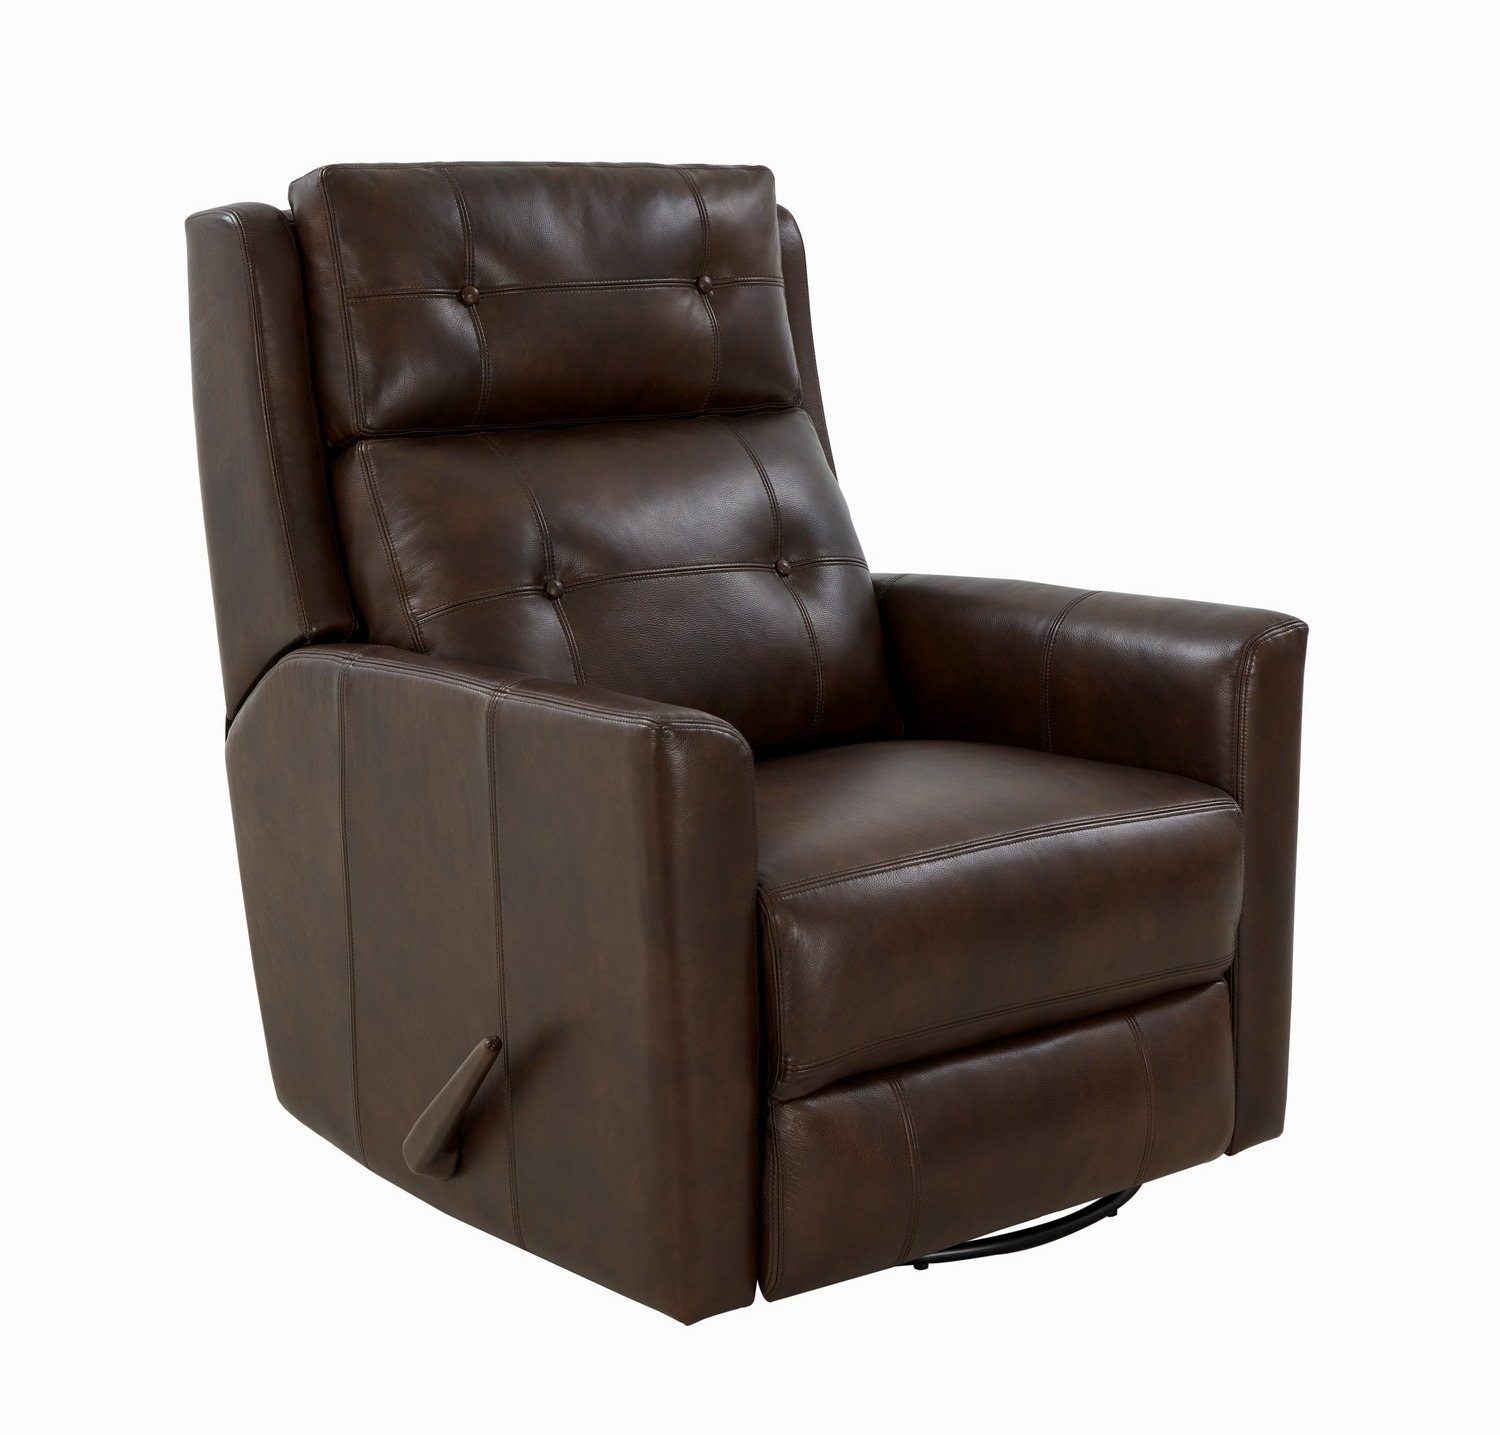 Barcalounger Marconi Swivel Glider Recliner Chair - Ashford Walnut/All Leather